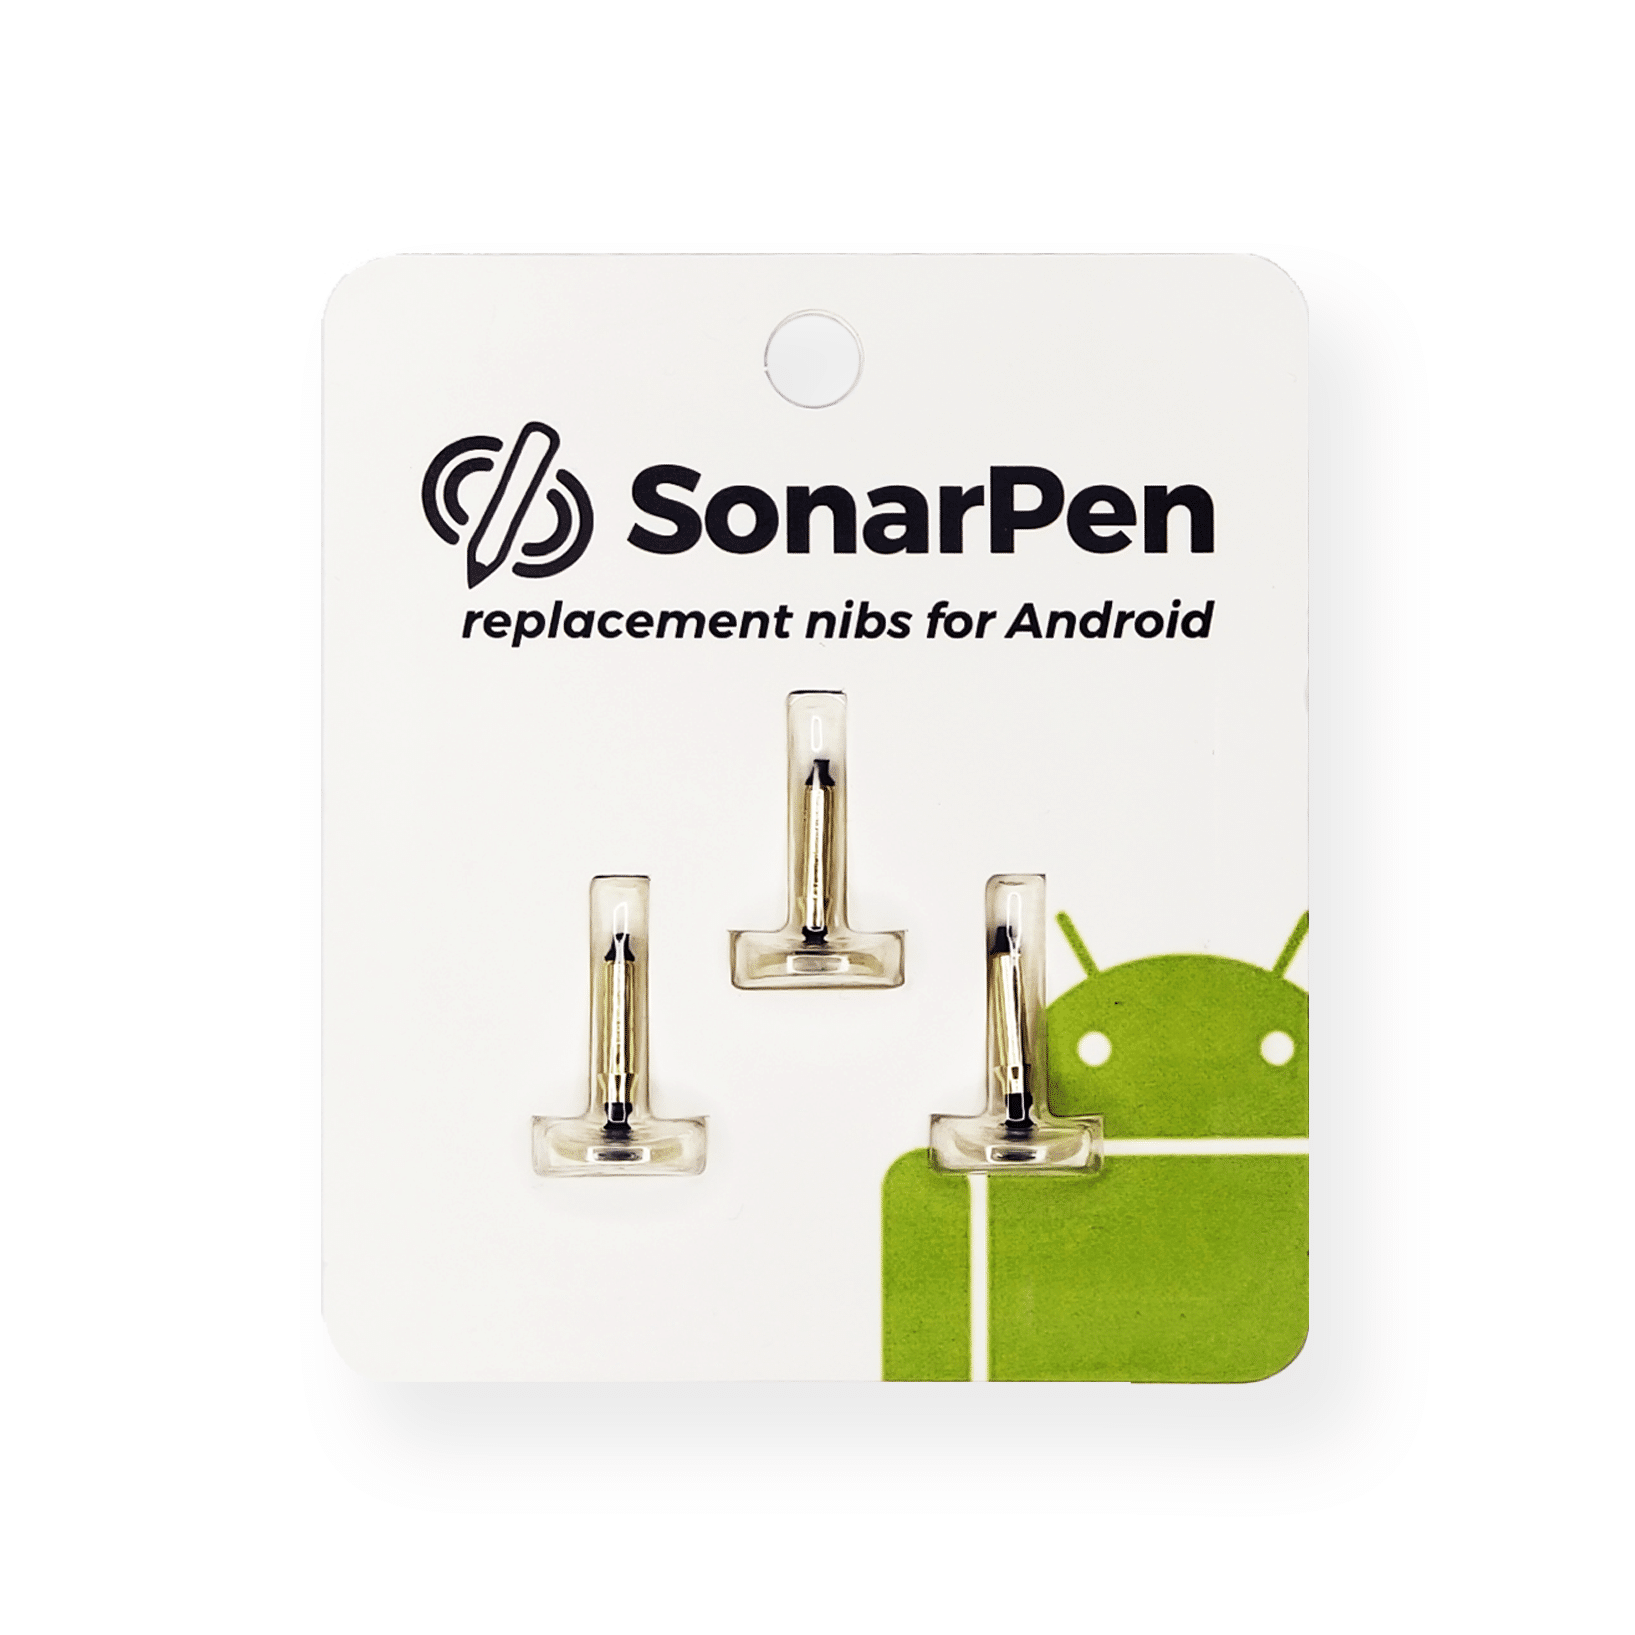 SonarPen smart stylus + Nib Set bundle